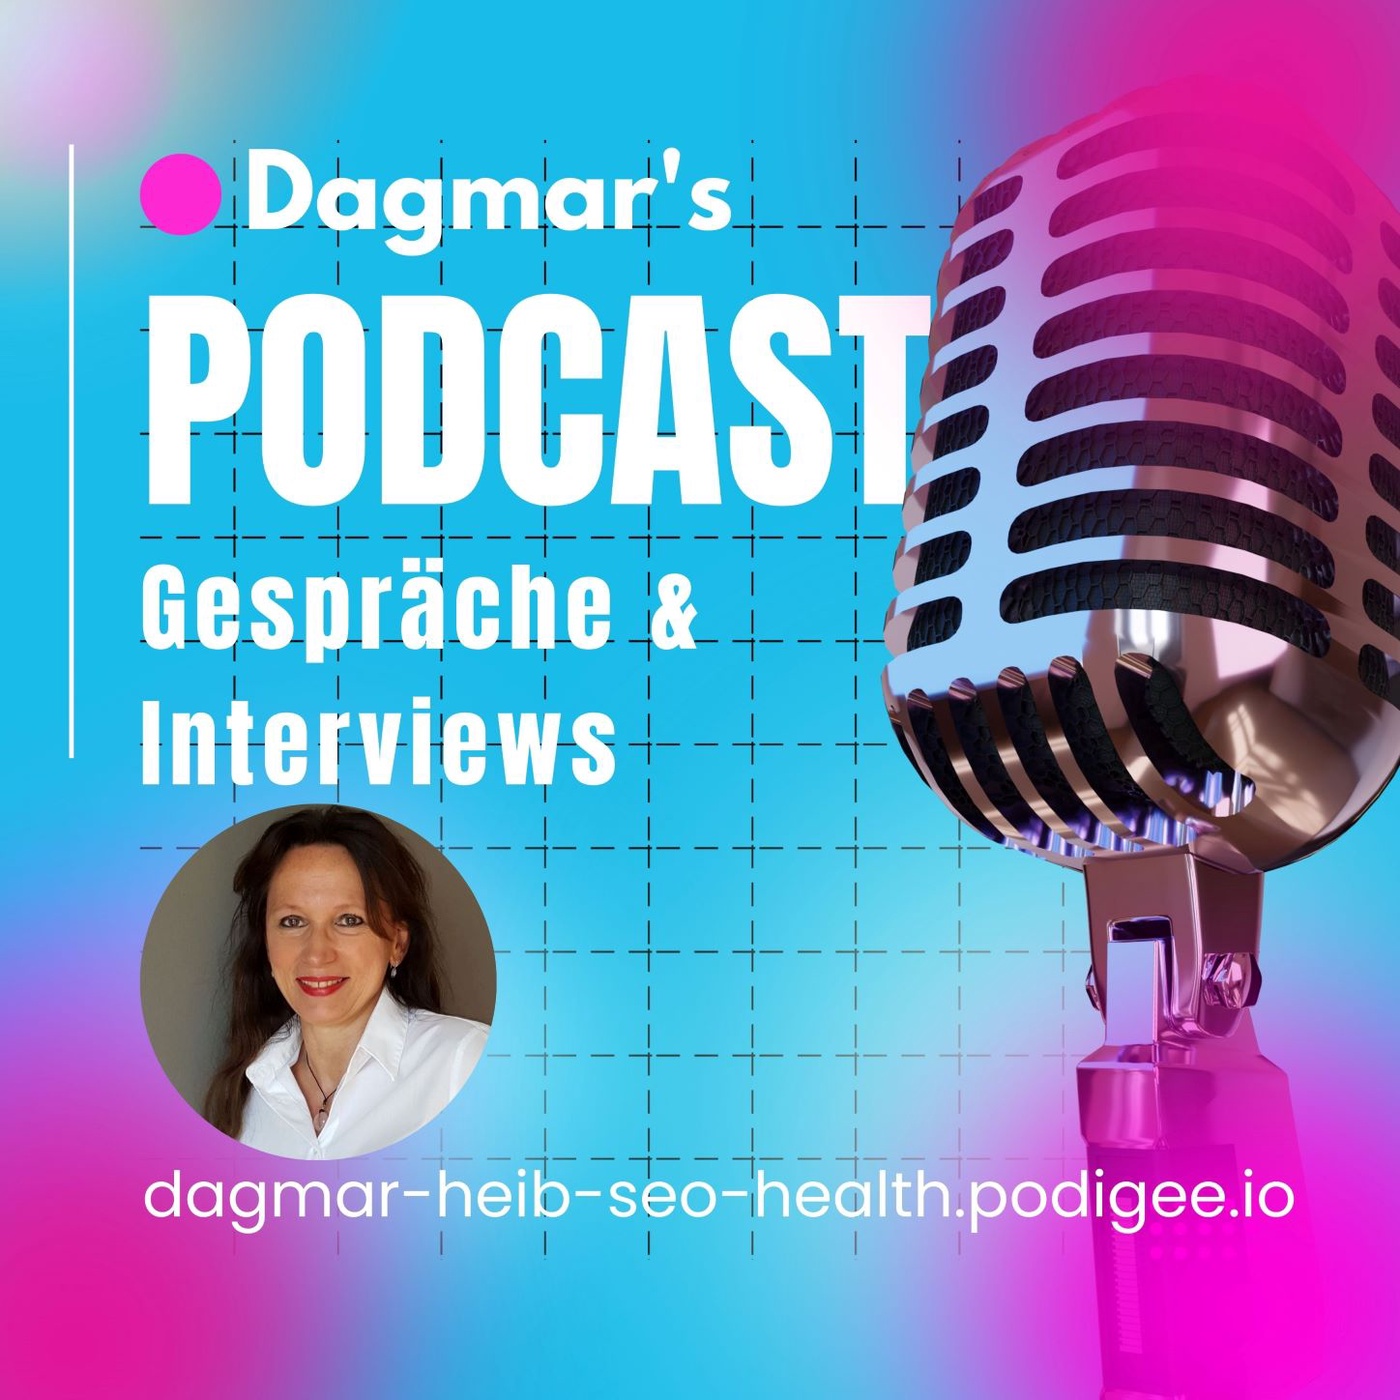 Dagmar's Podcast